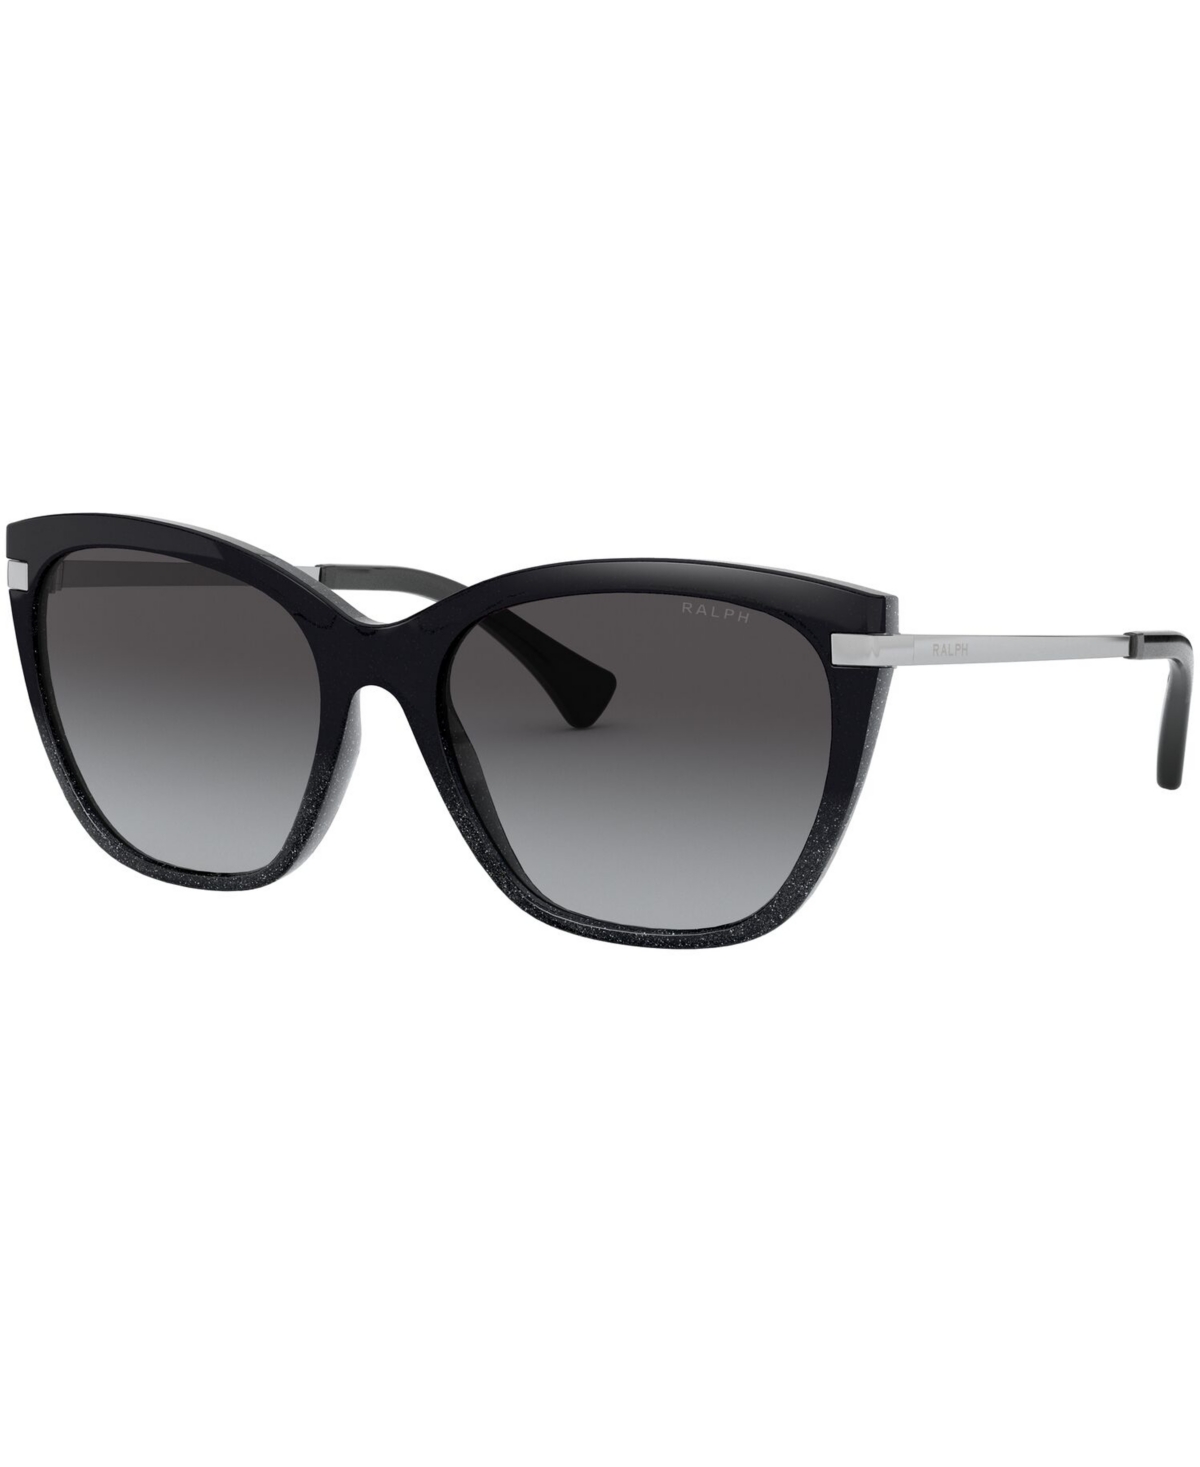 Ralph Sunglasses, RA5267 56 - BLACK GLITTER/BLACK GRADIENT/DEMO LENS